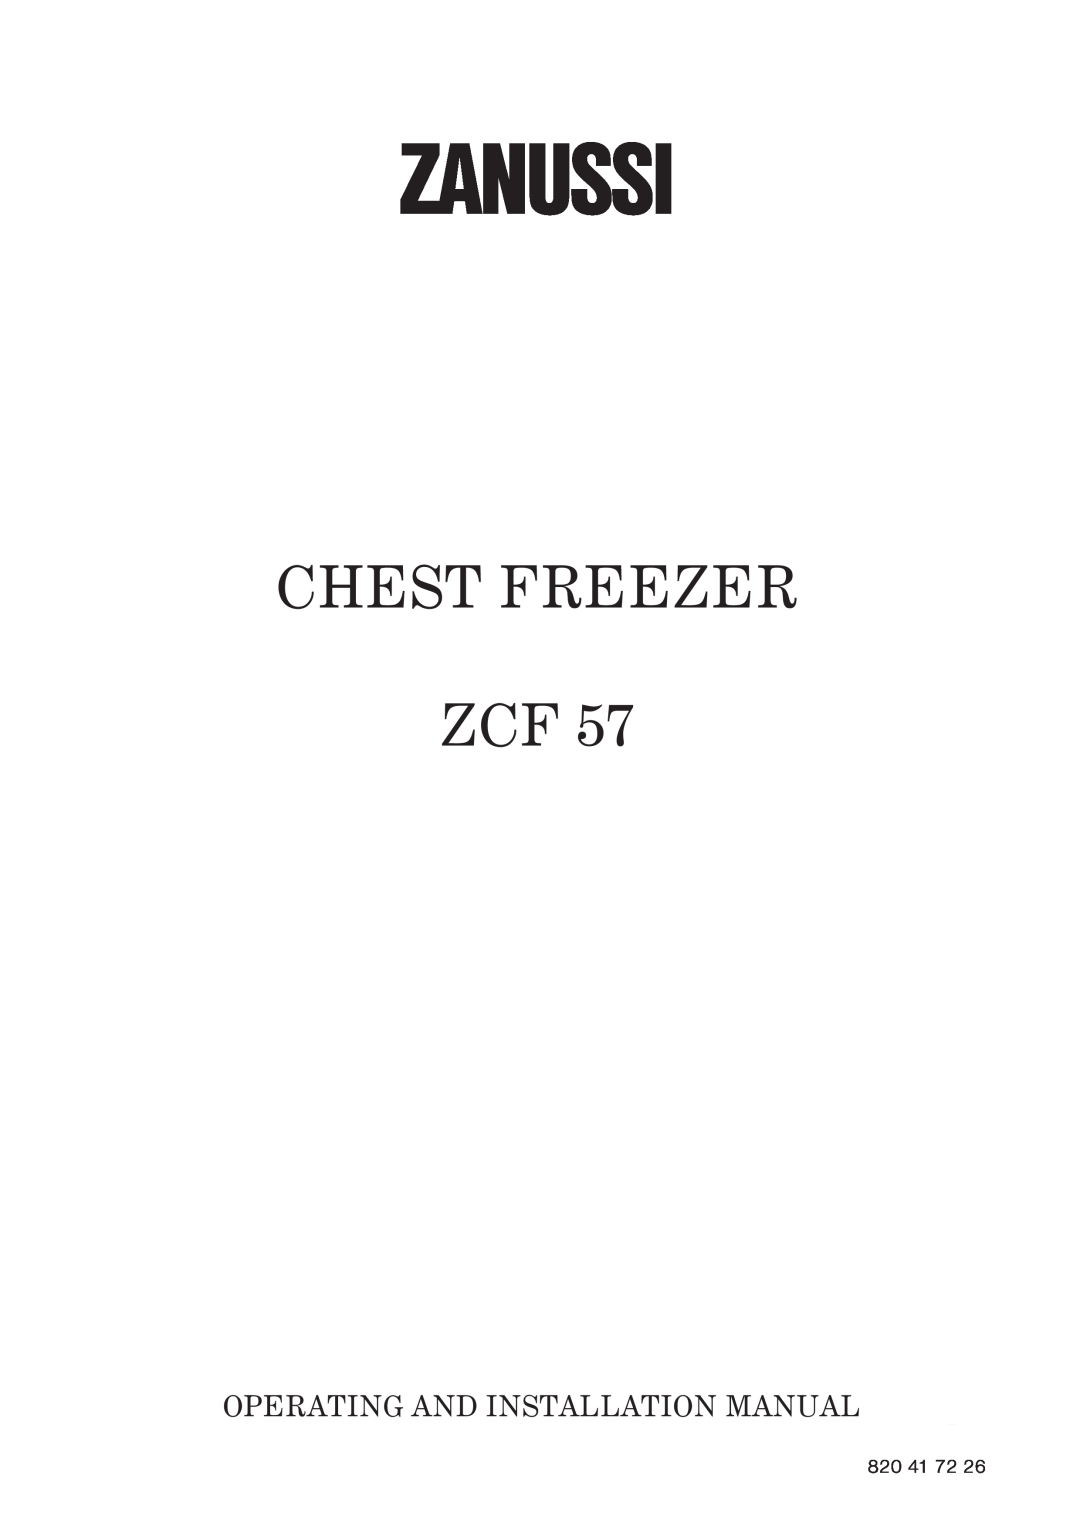 Zanussi ZCF 57 installation manual Zanussi, Chest Freezer Zcf, Operating And Installation Manual 